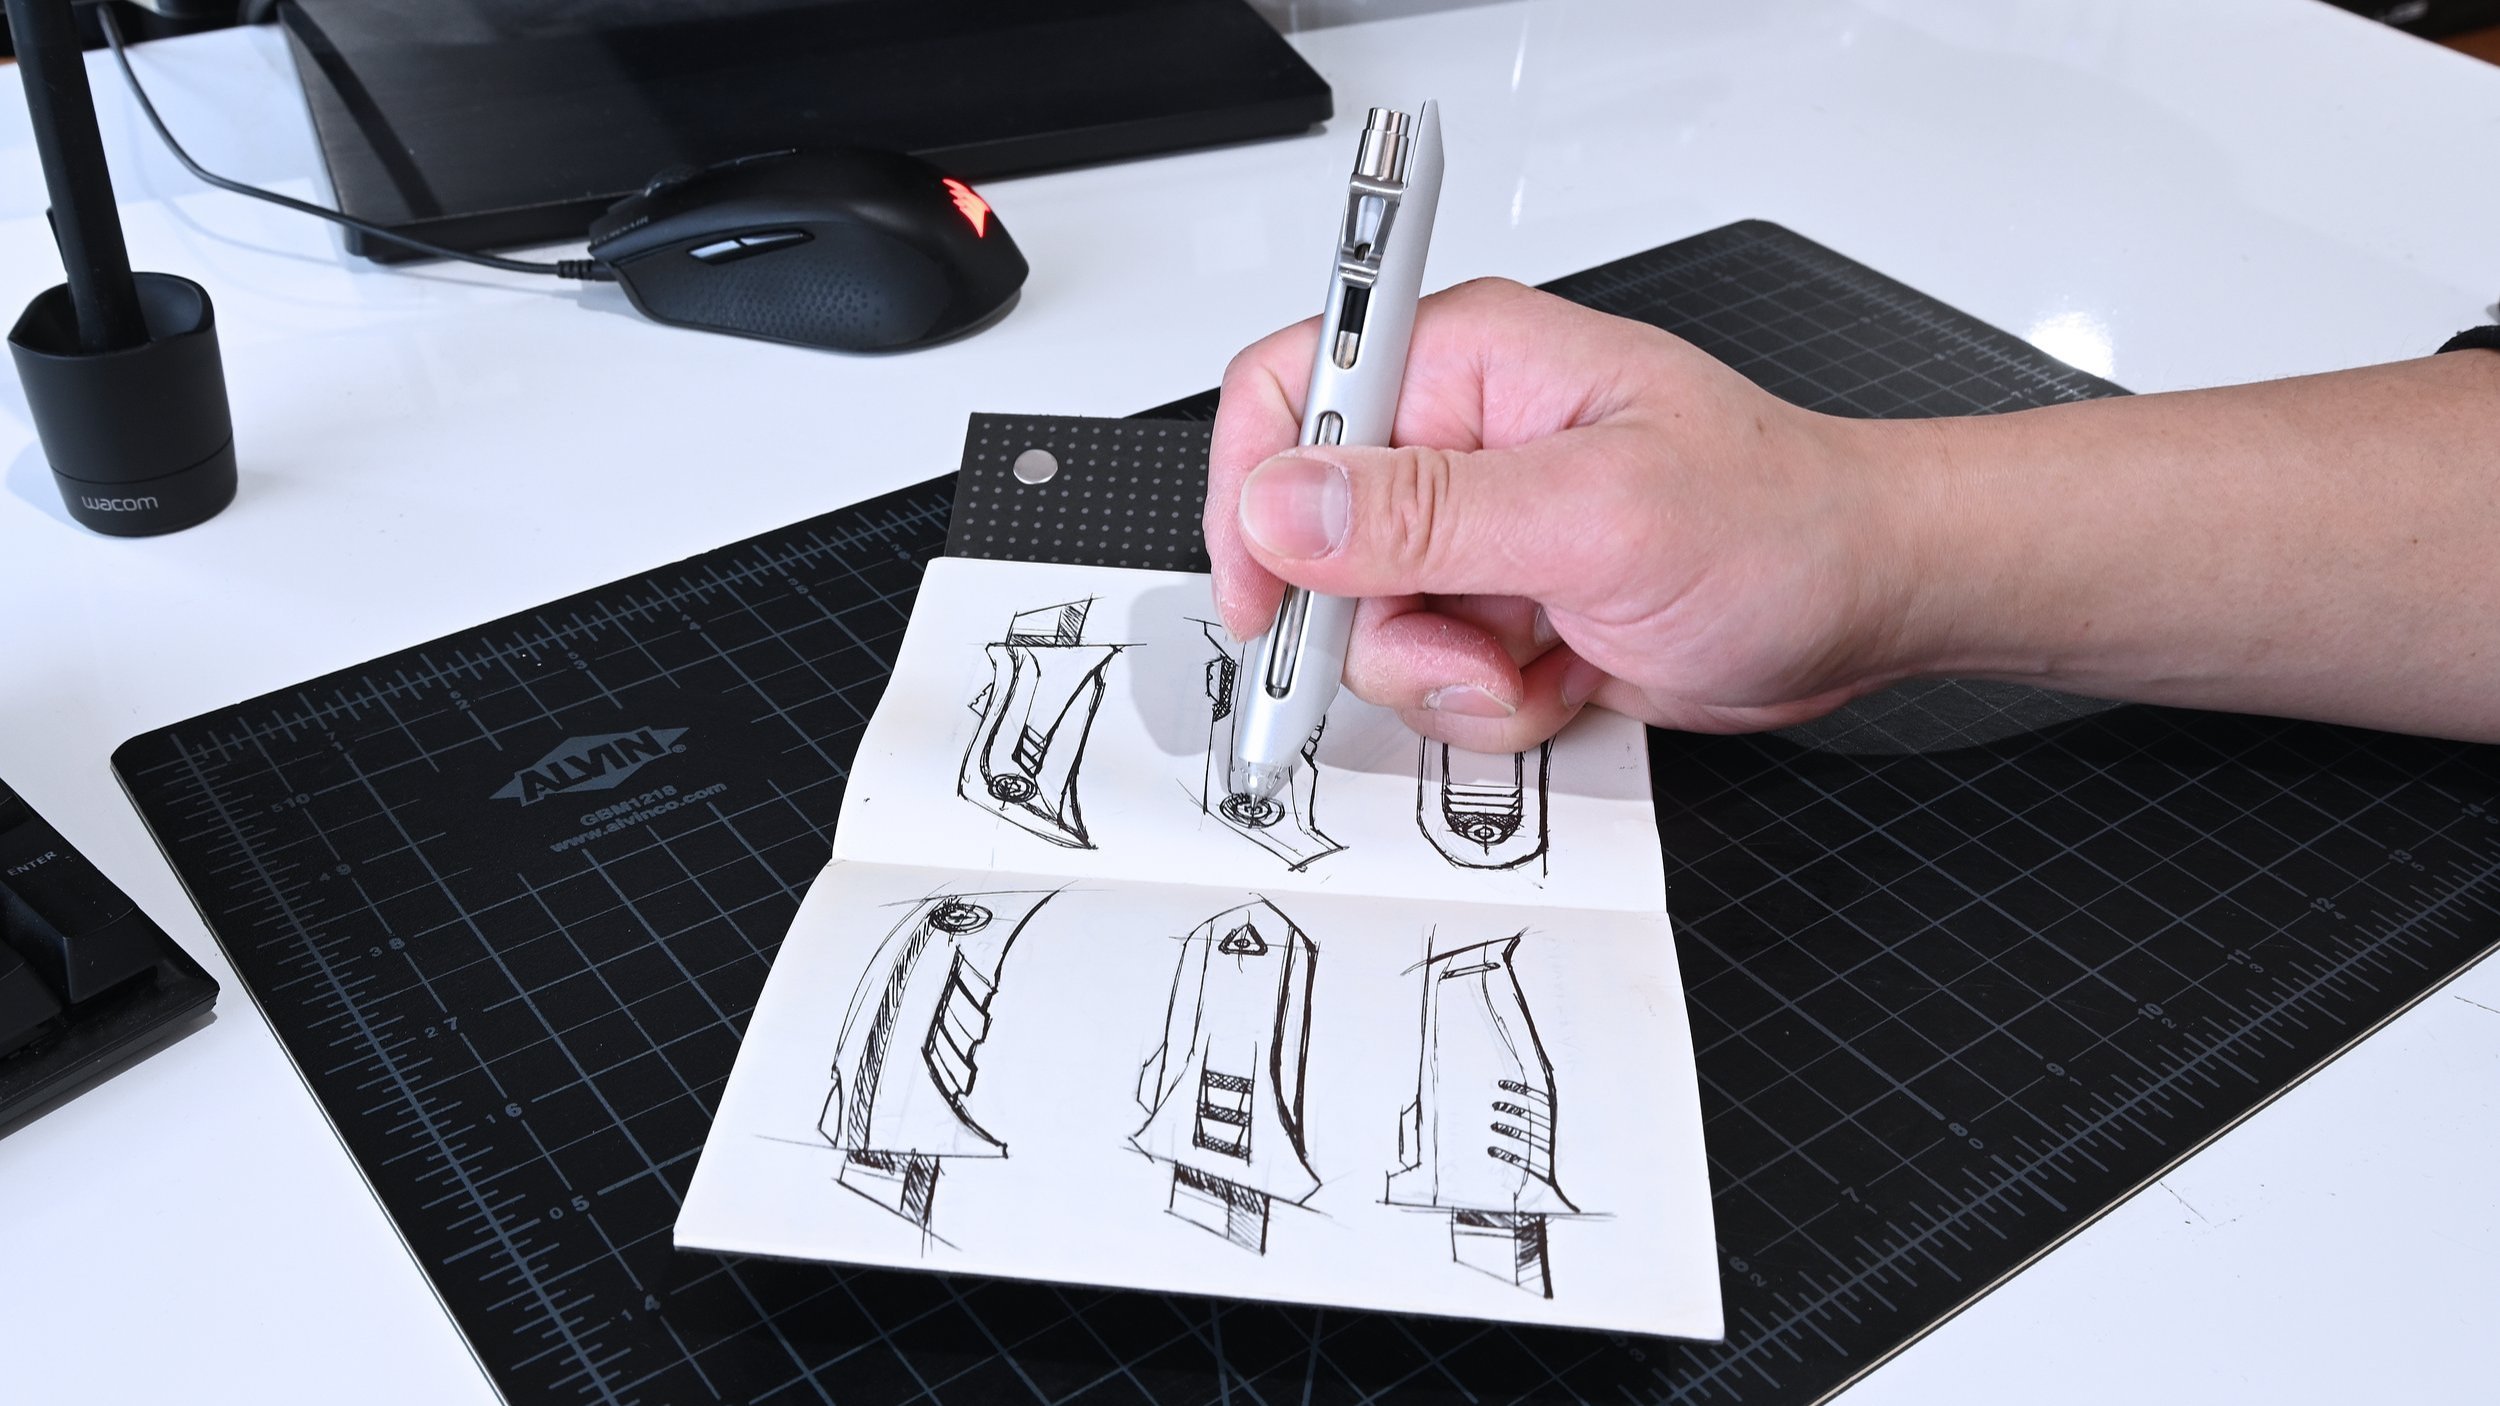 Engraved Leatherette Pen – Like No Otter Design Co